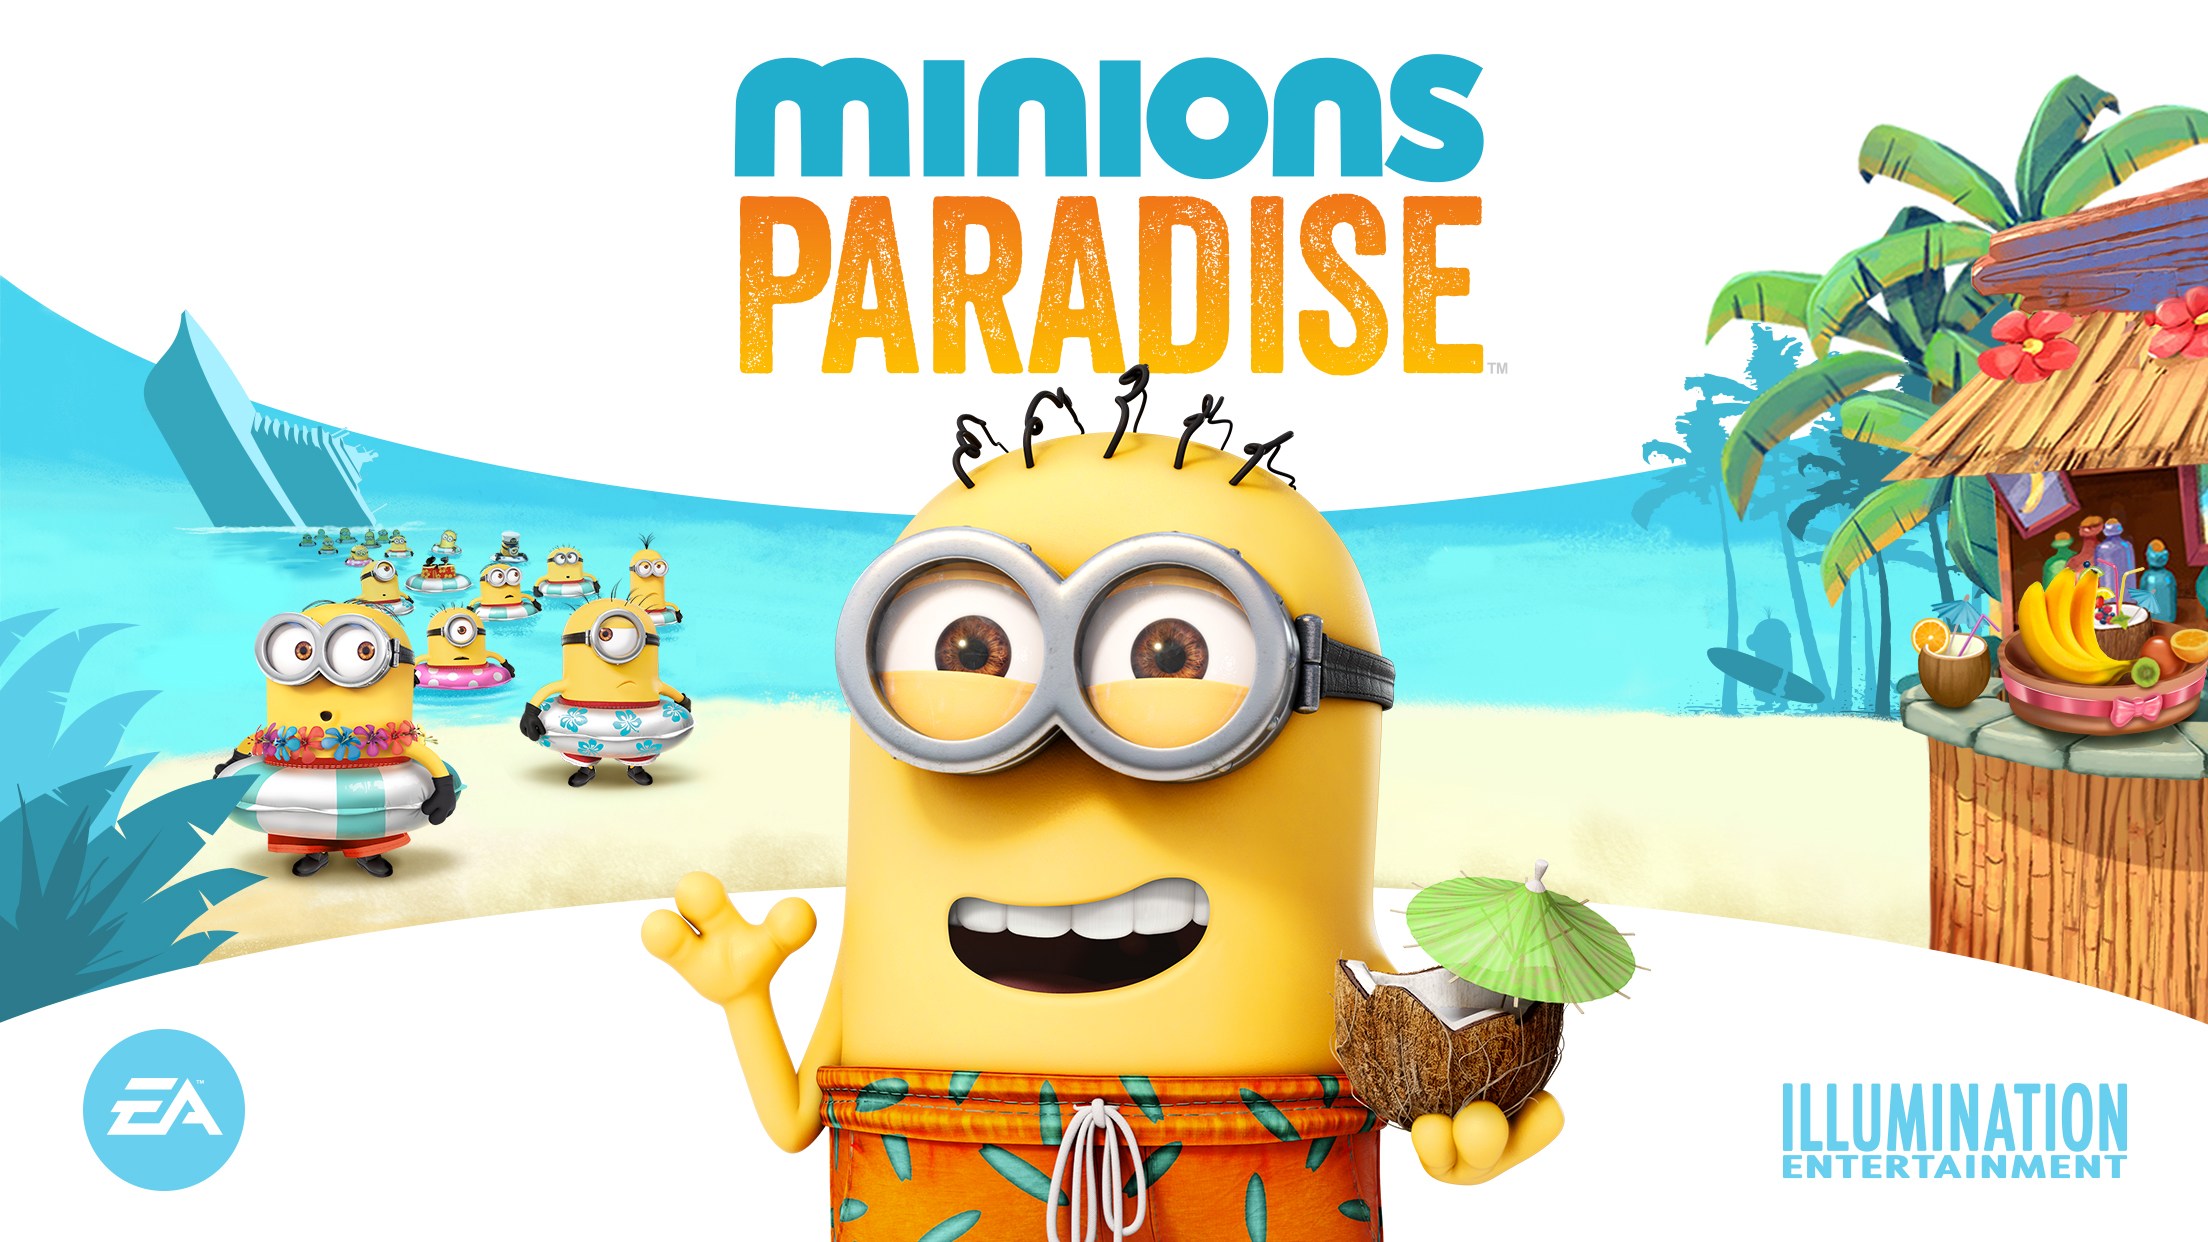 minions paradise download pc